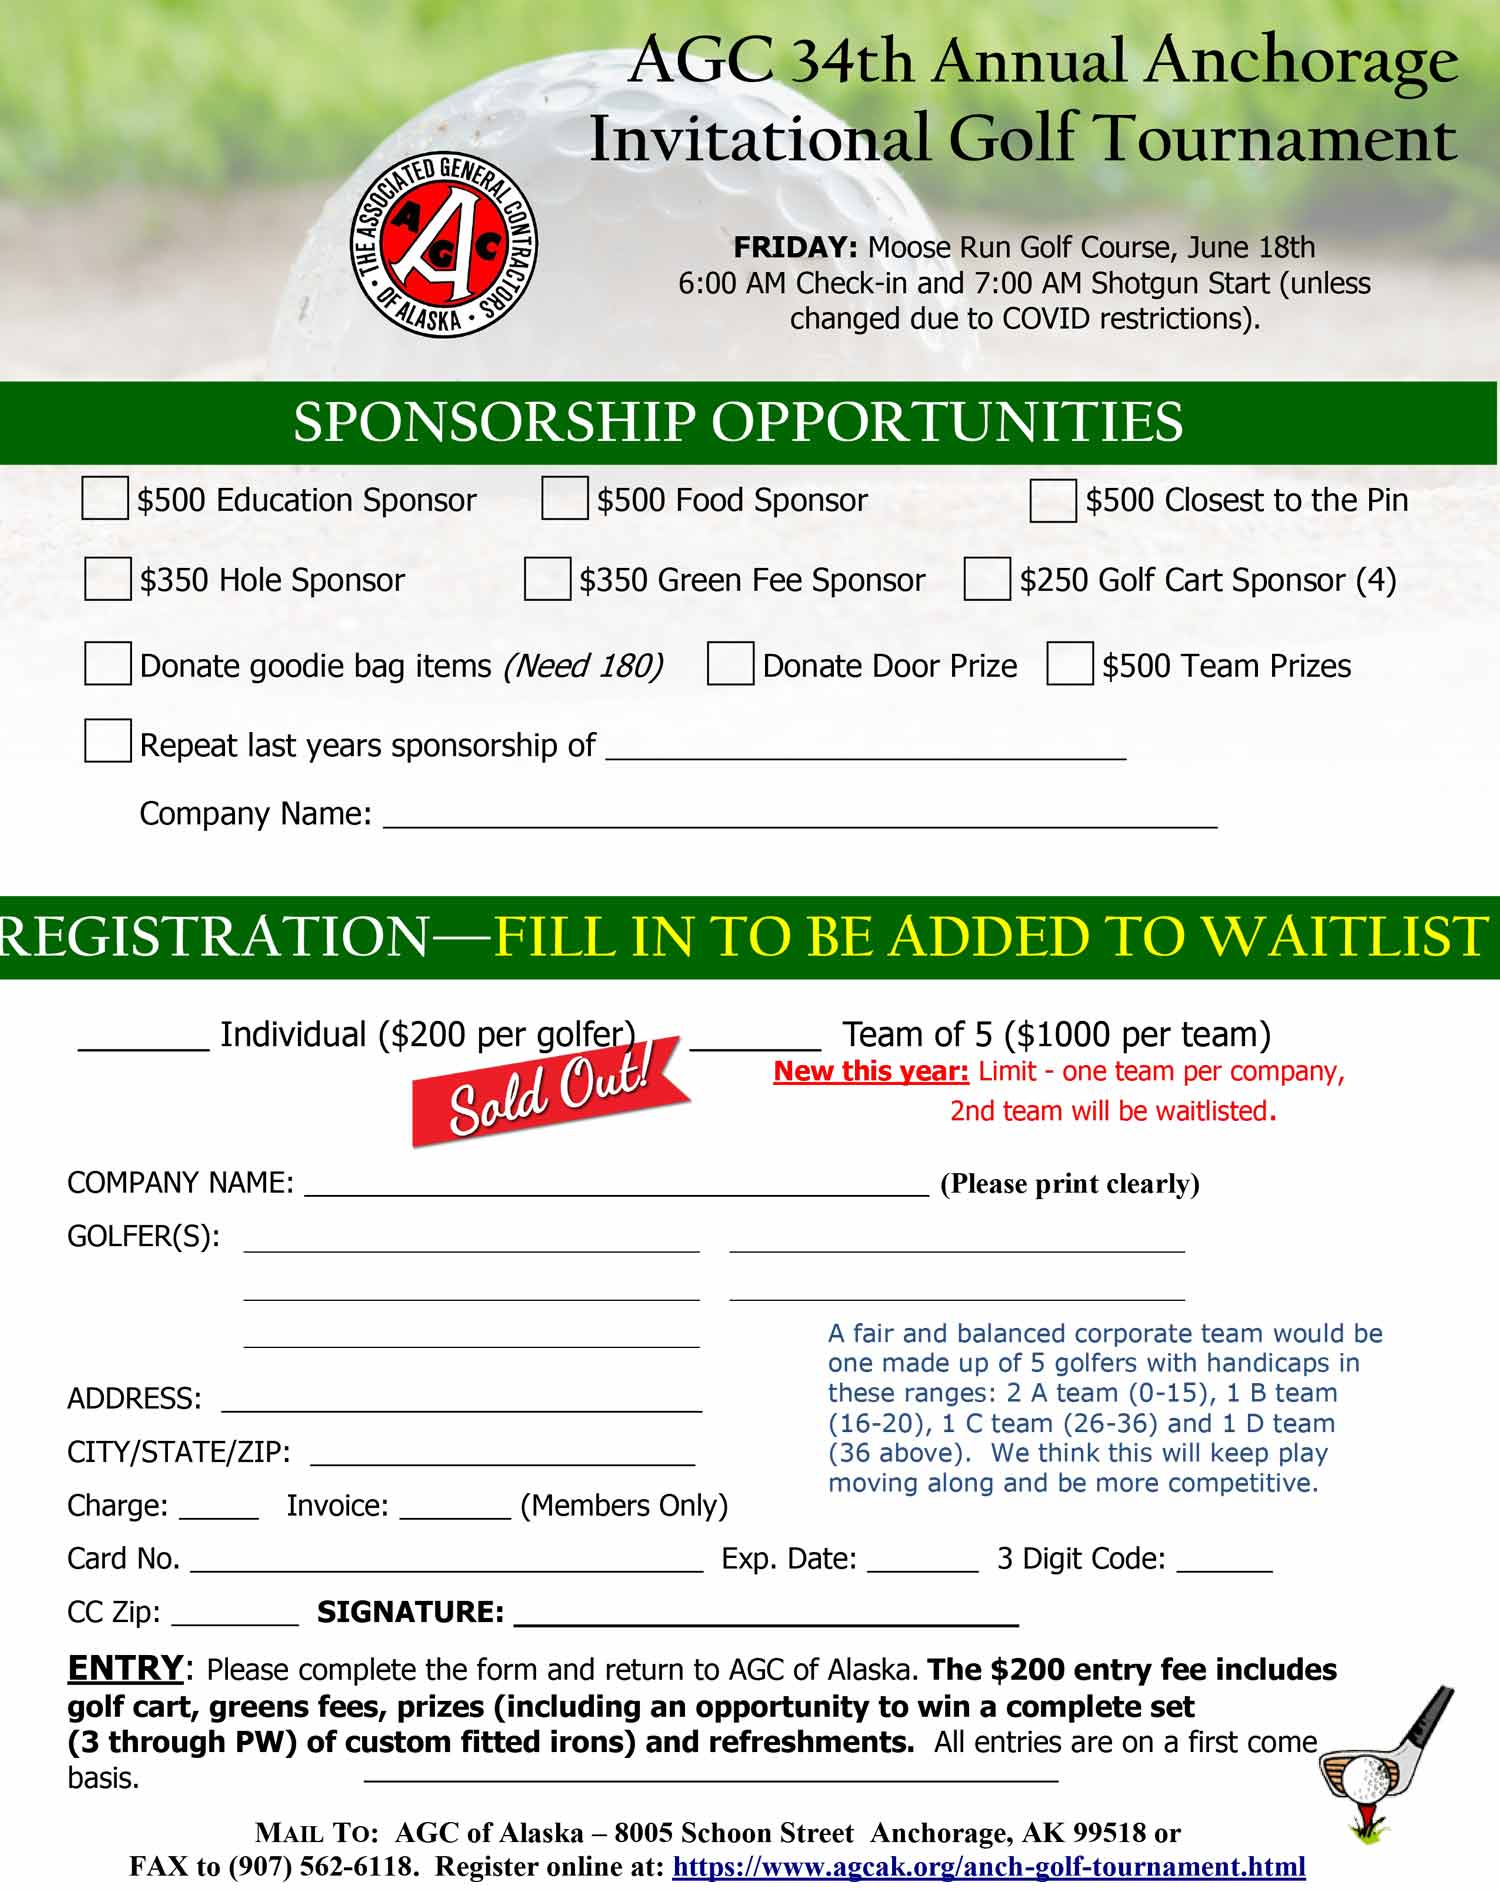 AGC 34th Annual Anchorage Invitational Golf Tournament Registration Advertisement